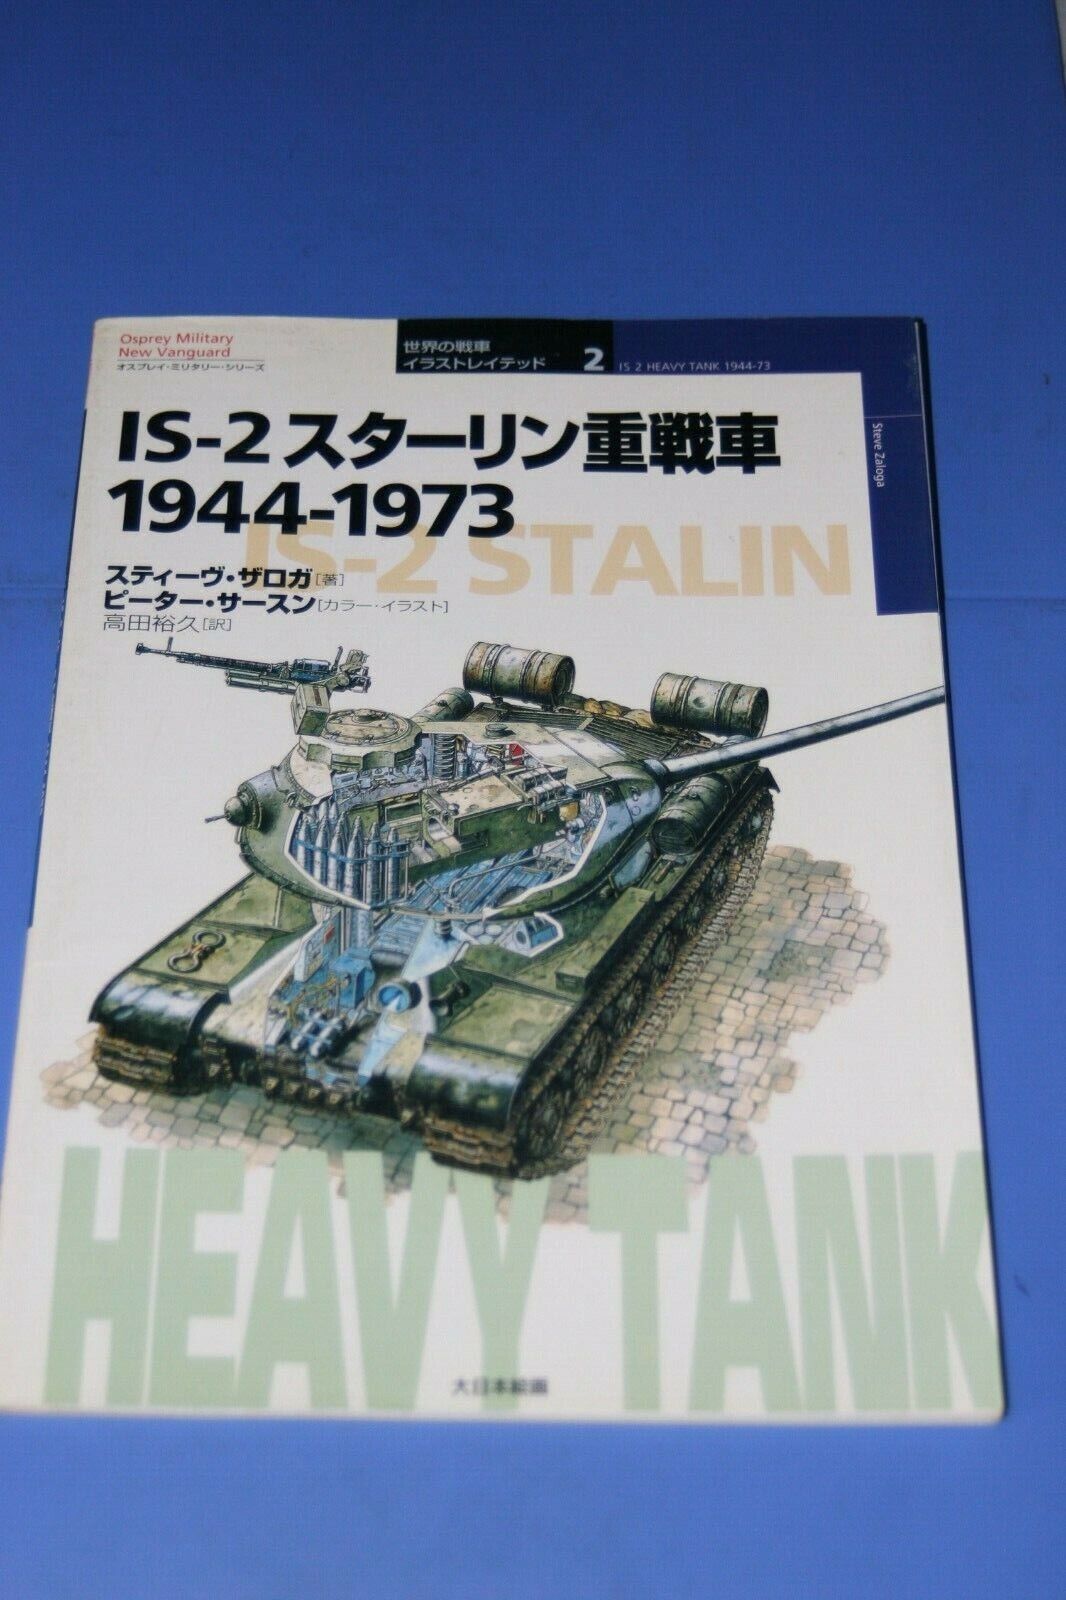 Stalin Heavy Tank 1944-1973 Dainipponkaiga Japan 2000